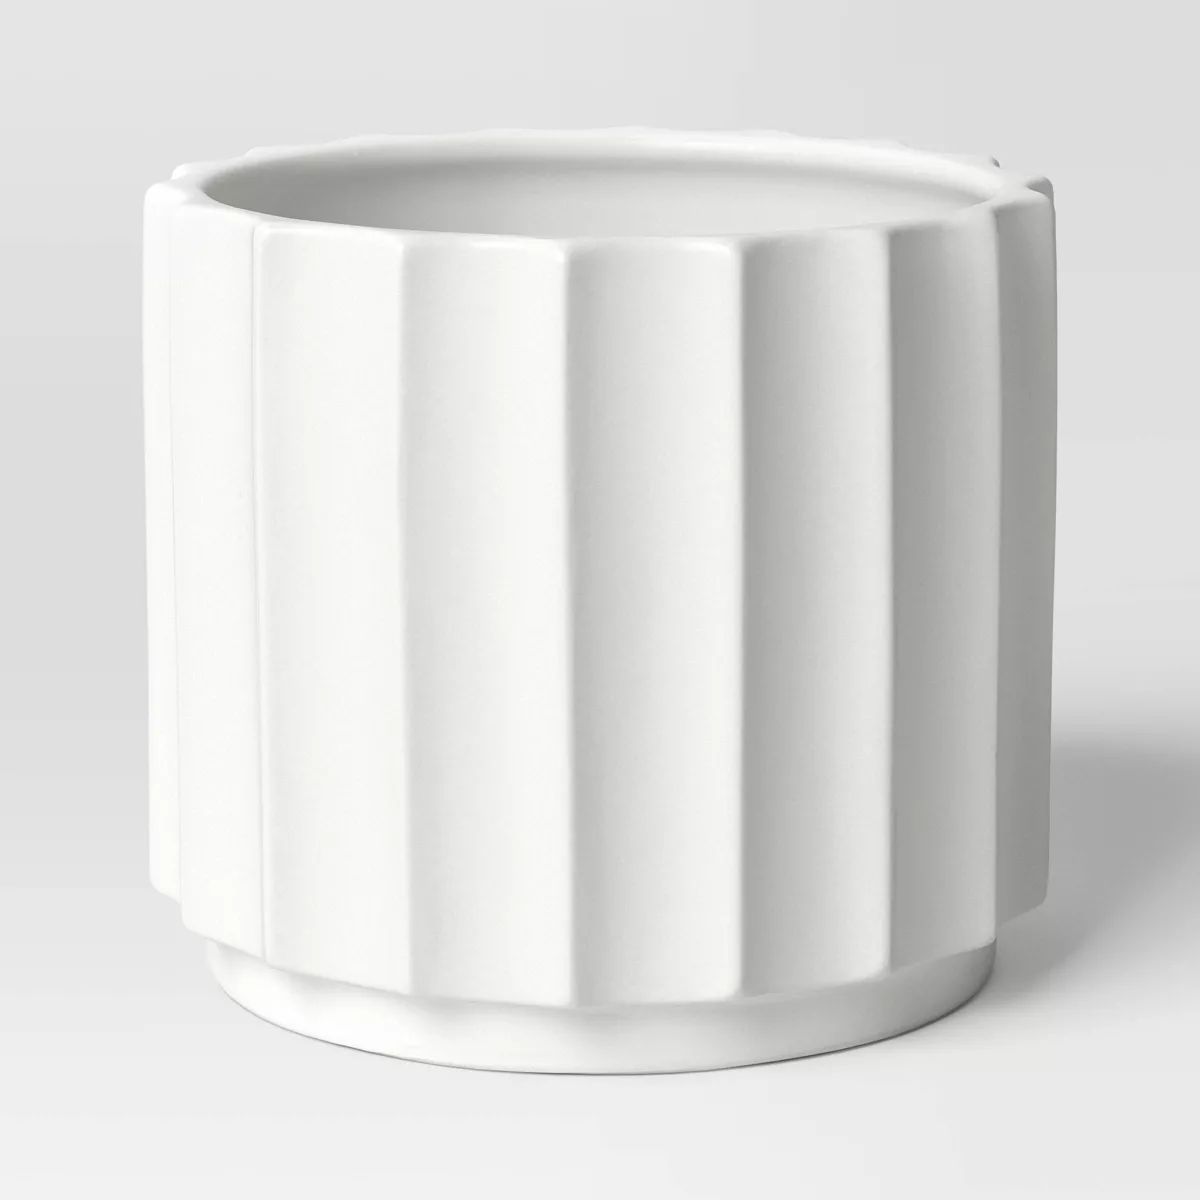 Geared Terracotta Indoor Outdoor Planter Pot White 12.13"x12.13" - Threshold™ | Target